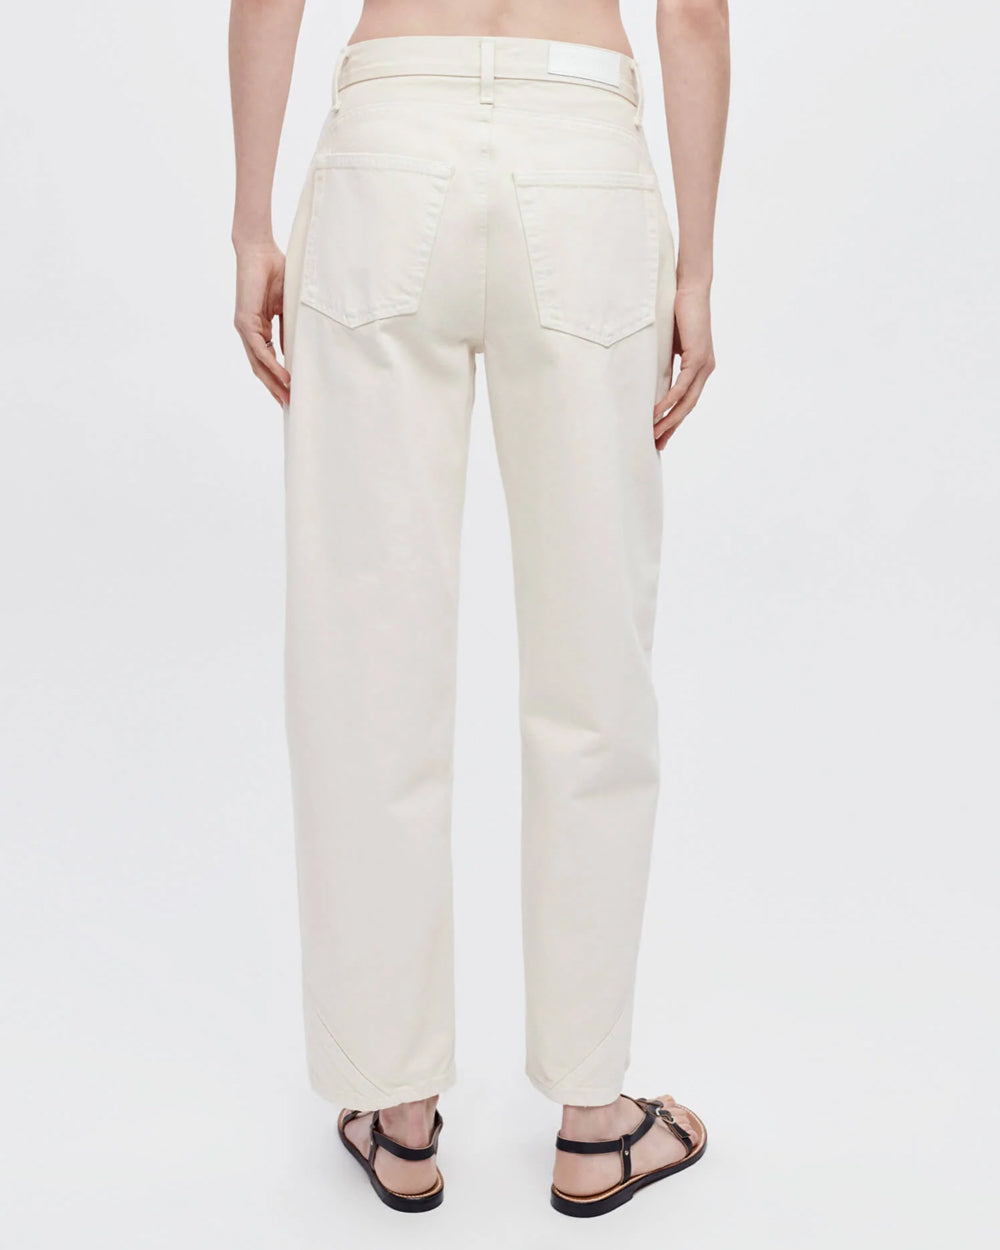 Wide Taper Jean in Vintage White